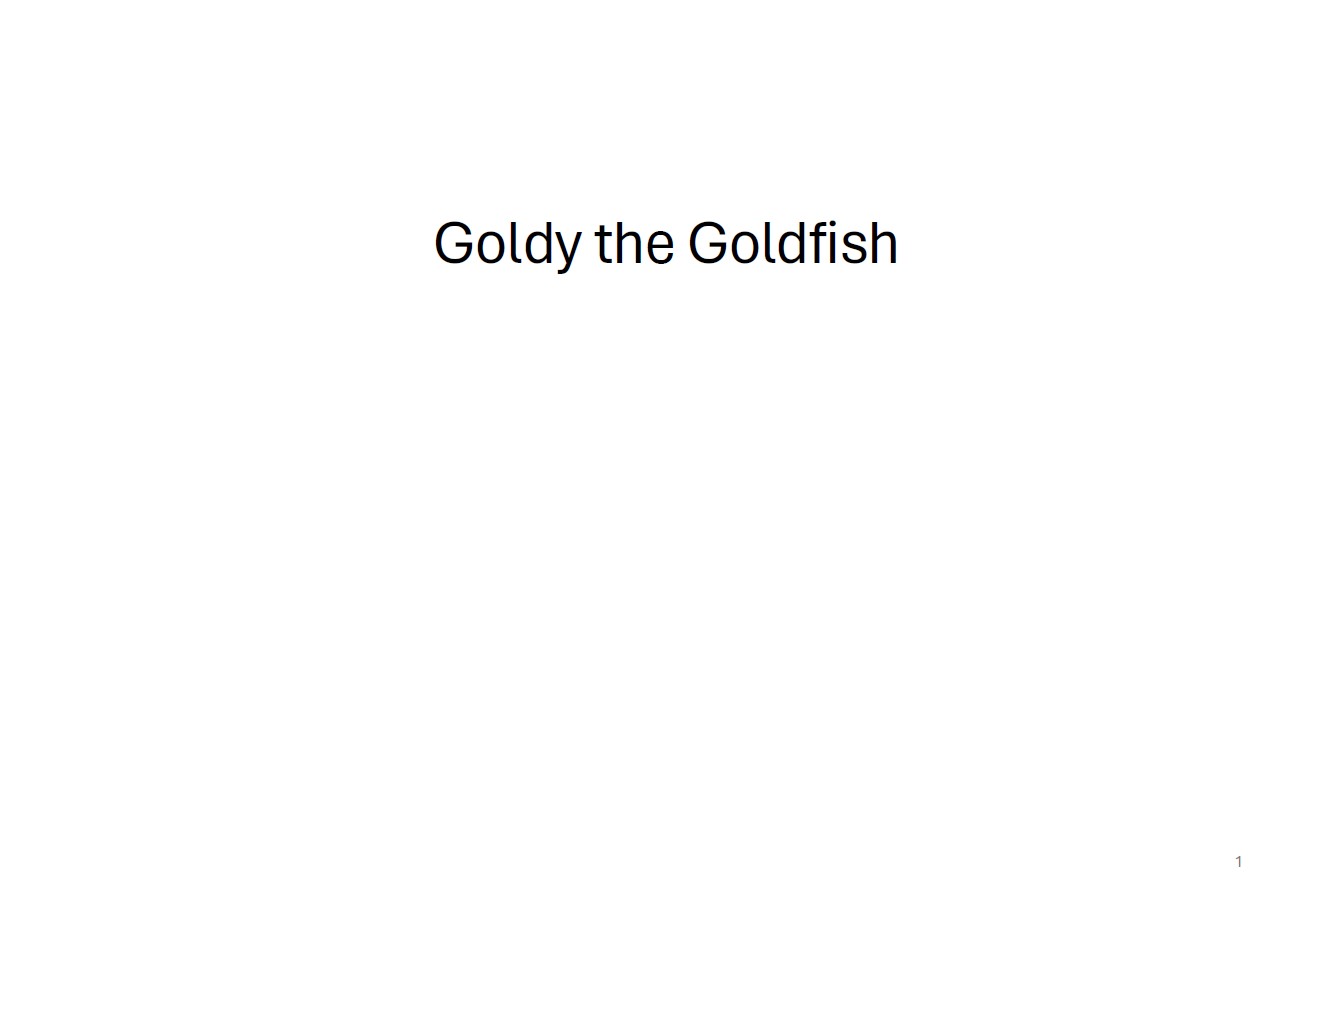 Goldy the Goldfish by Harper J.